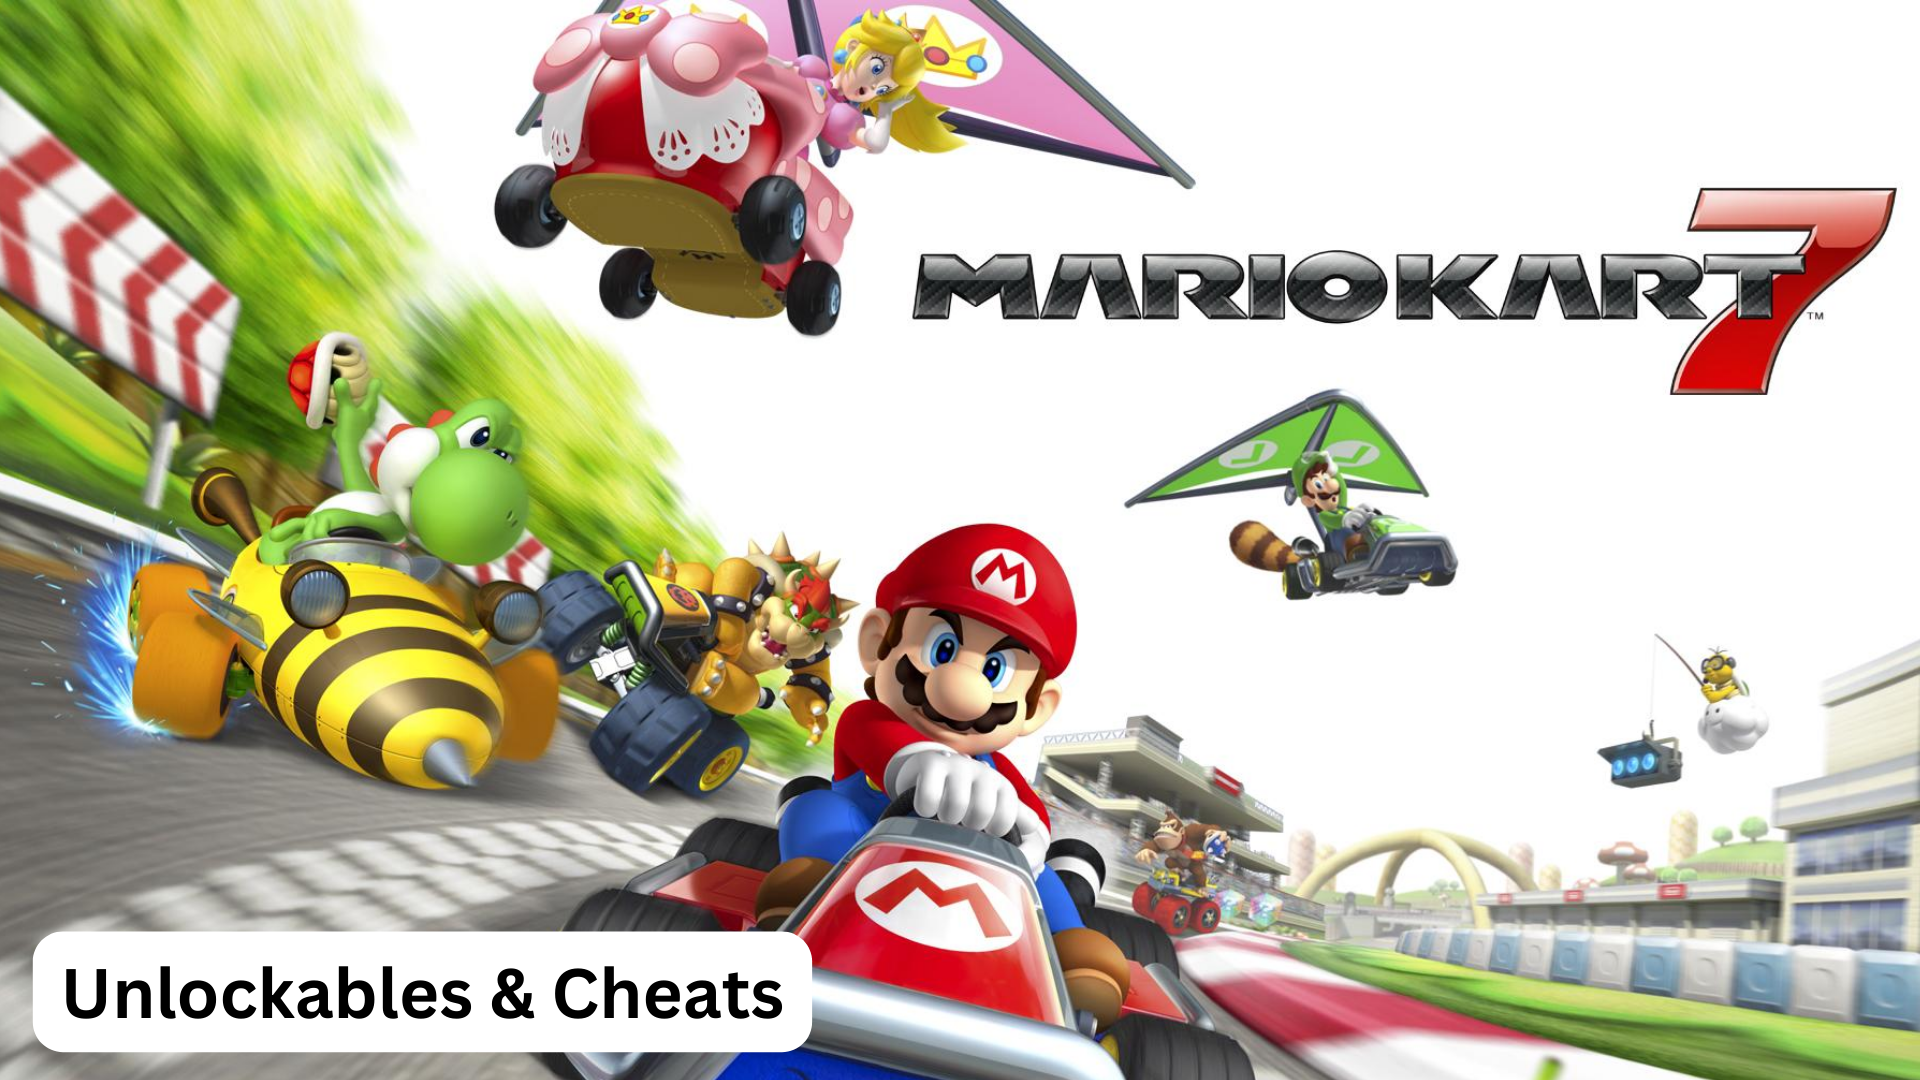 Mario Kart 7 Unlockables & Cheats